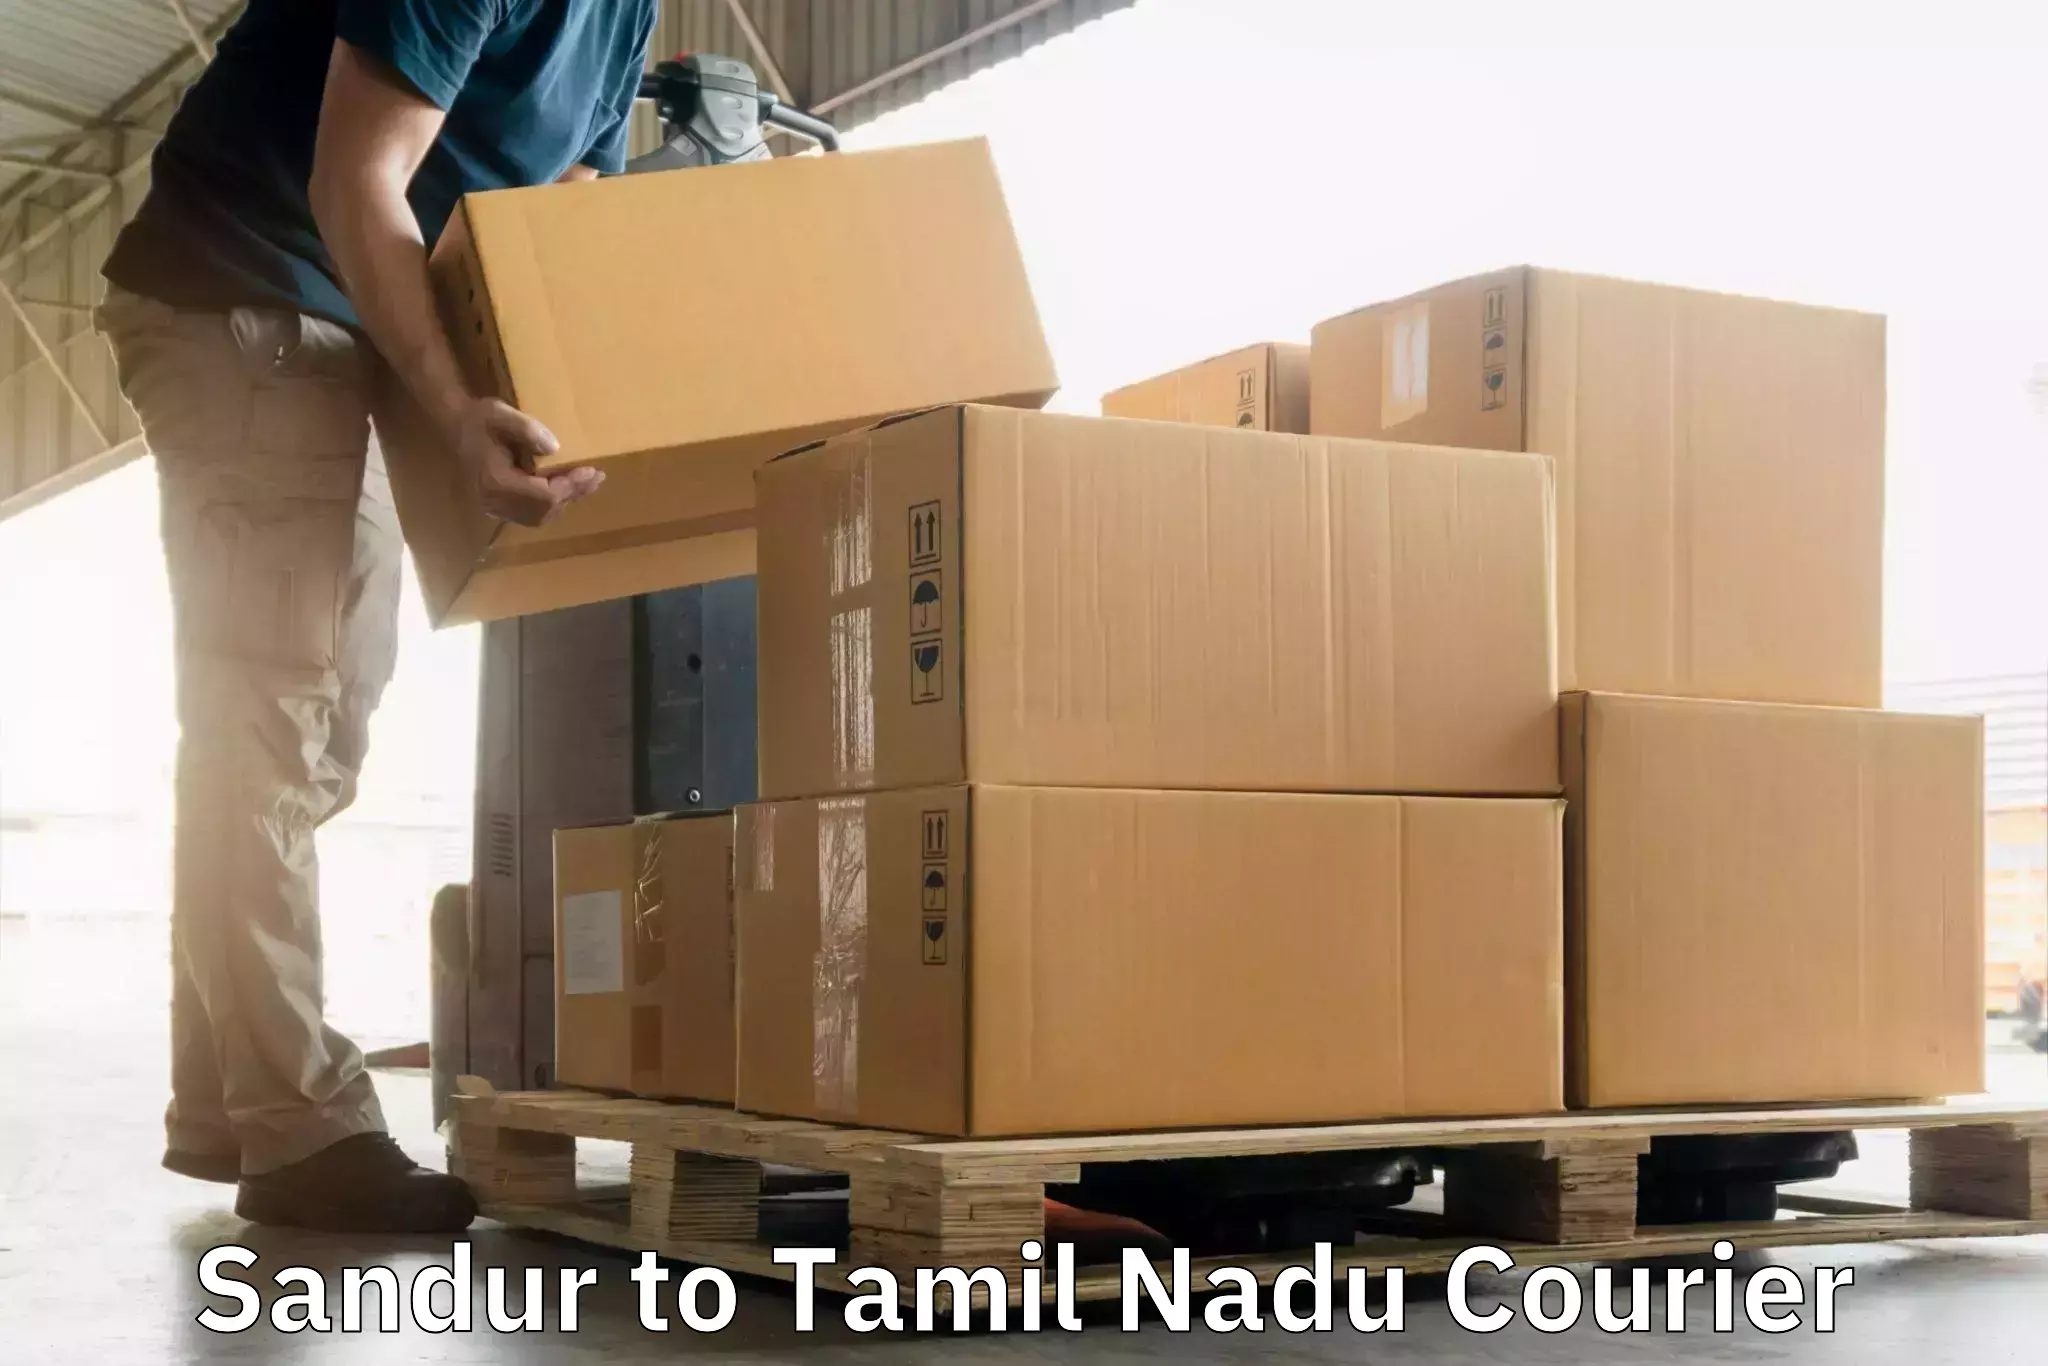 Cash on delivery service Sandur to Tamil Nadu